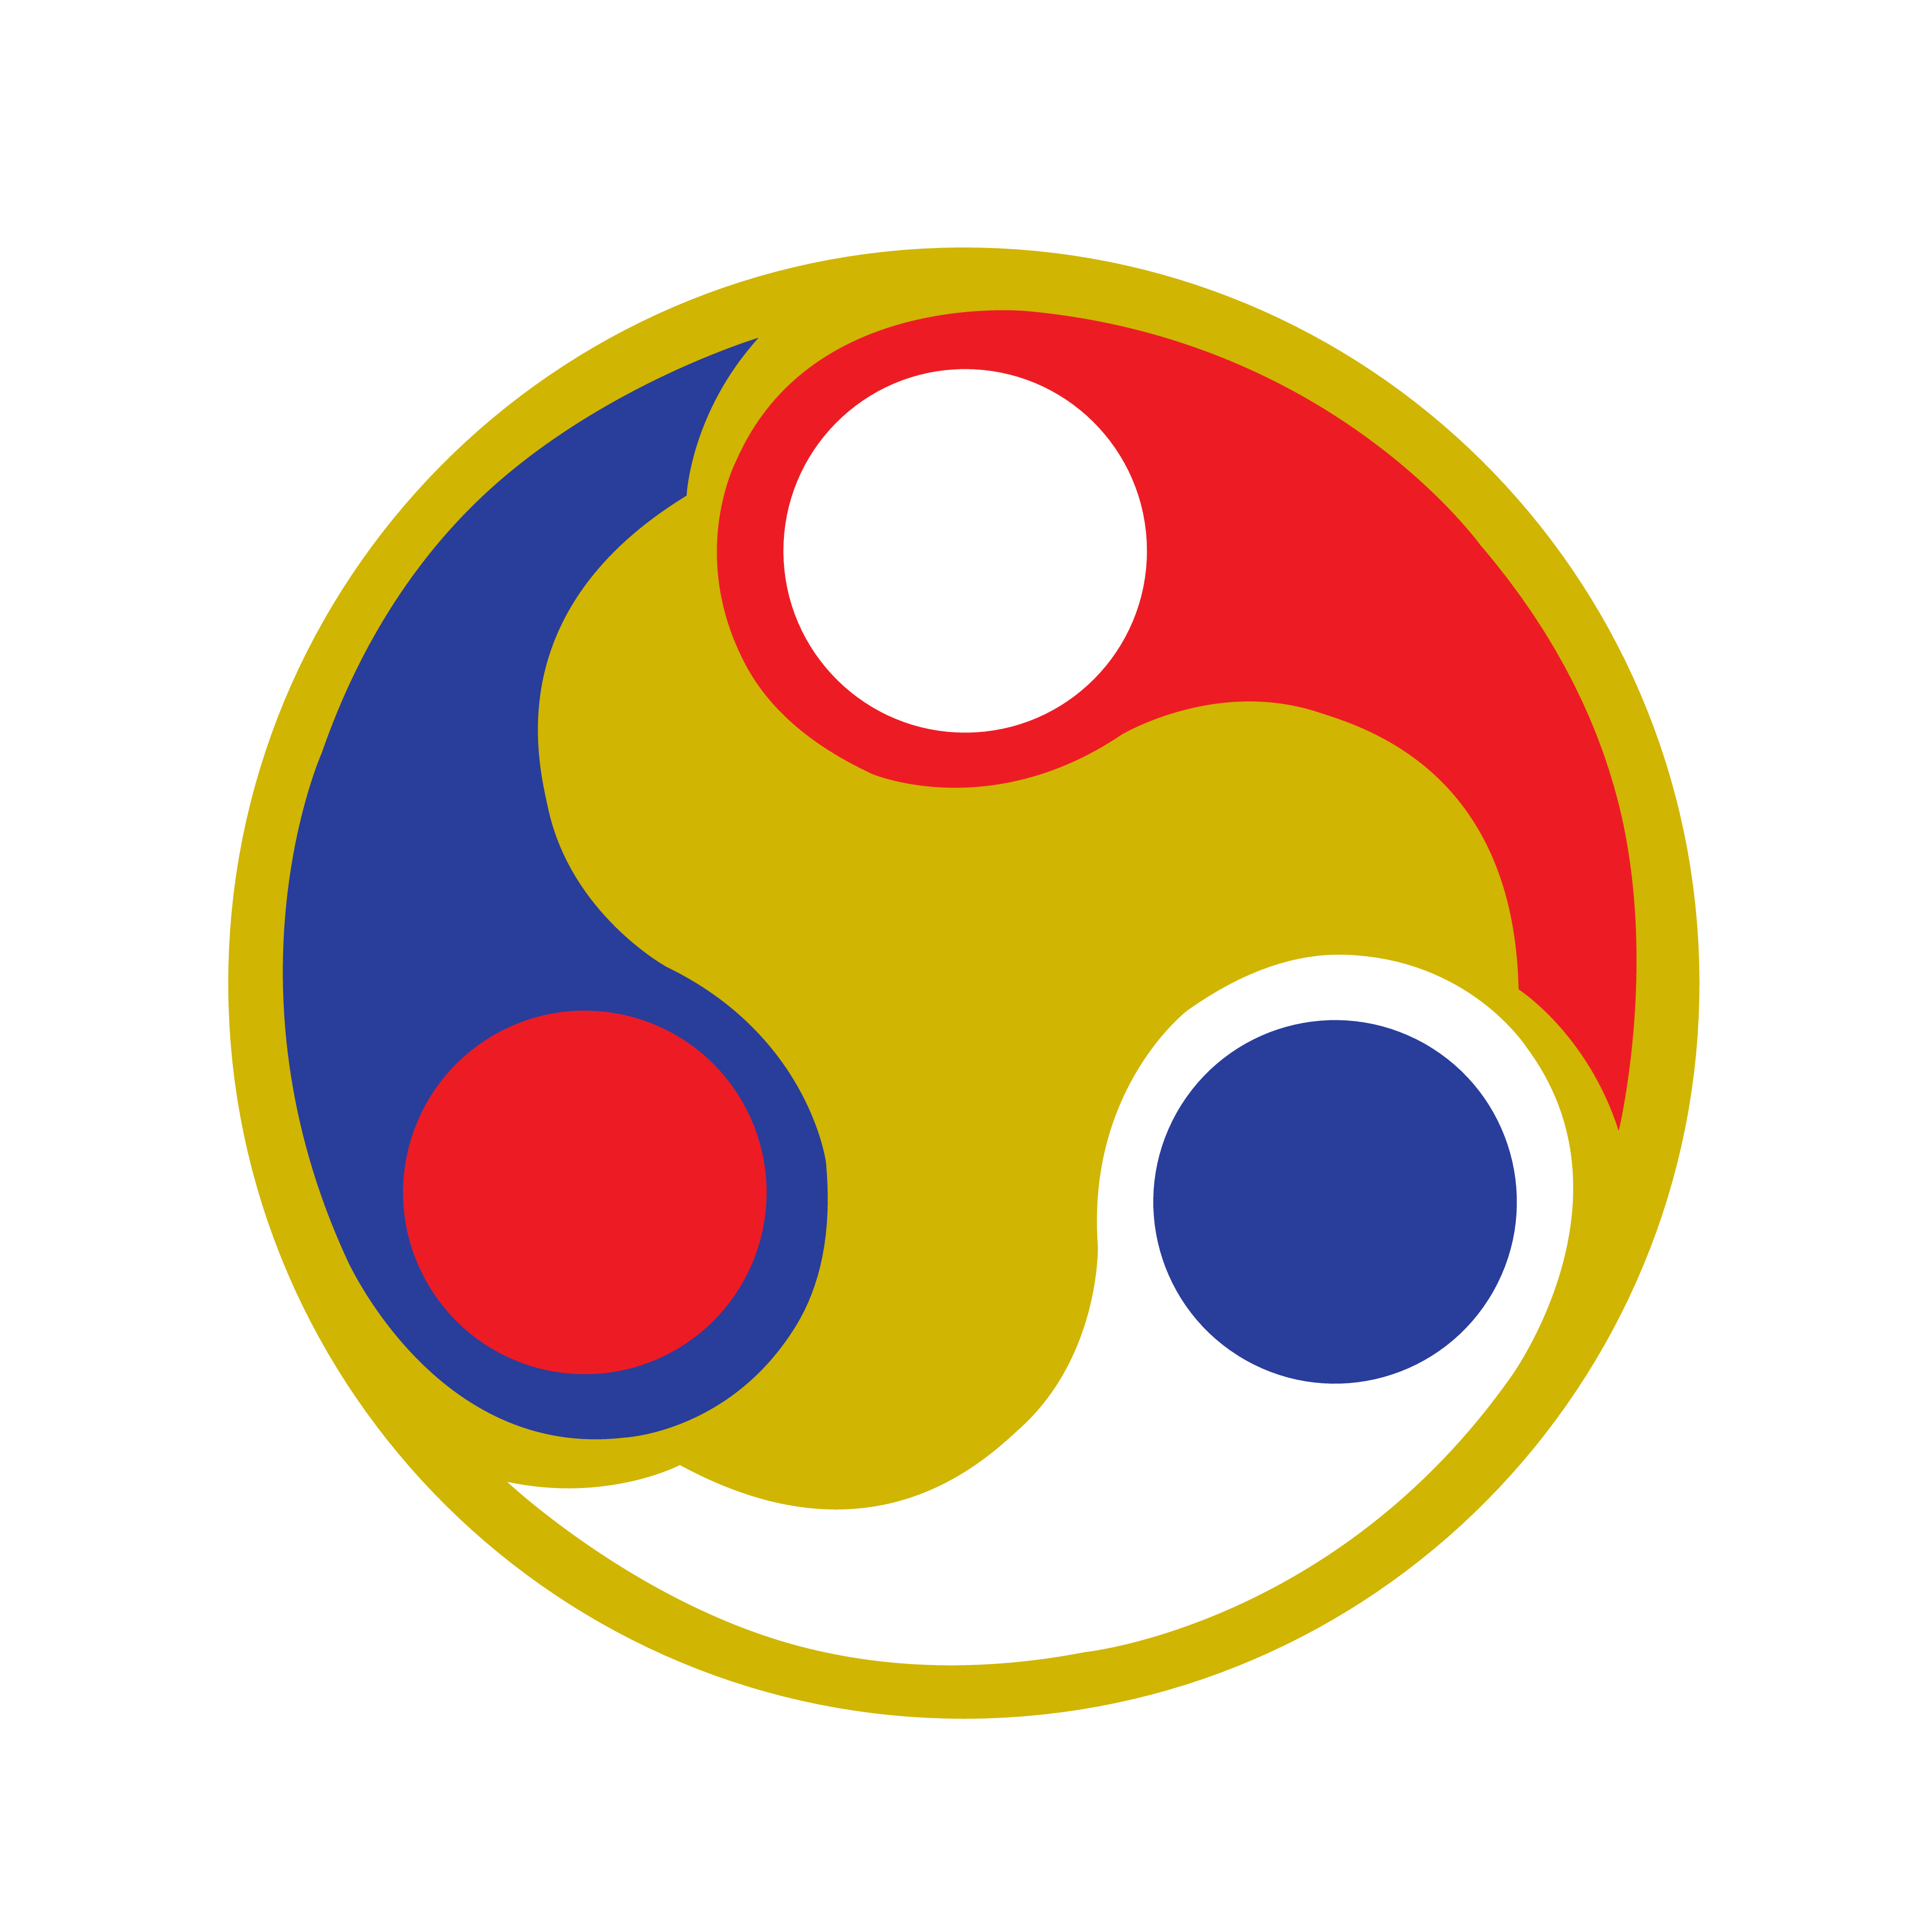 research-lab-logo